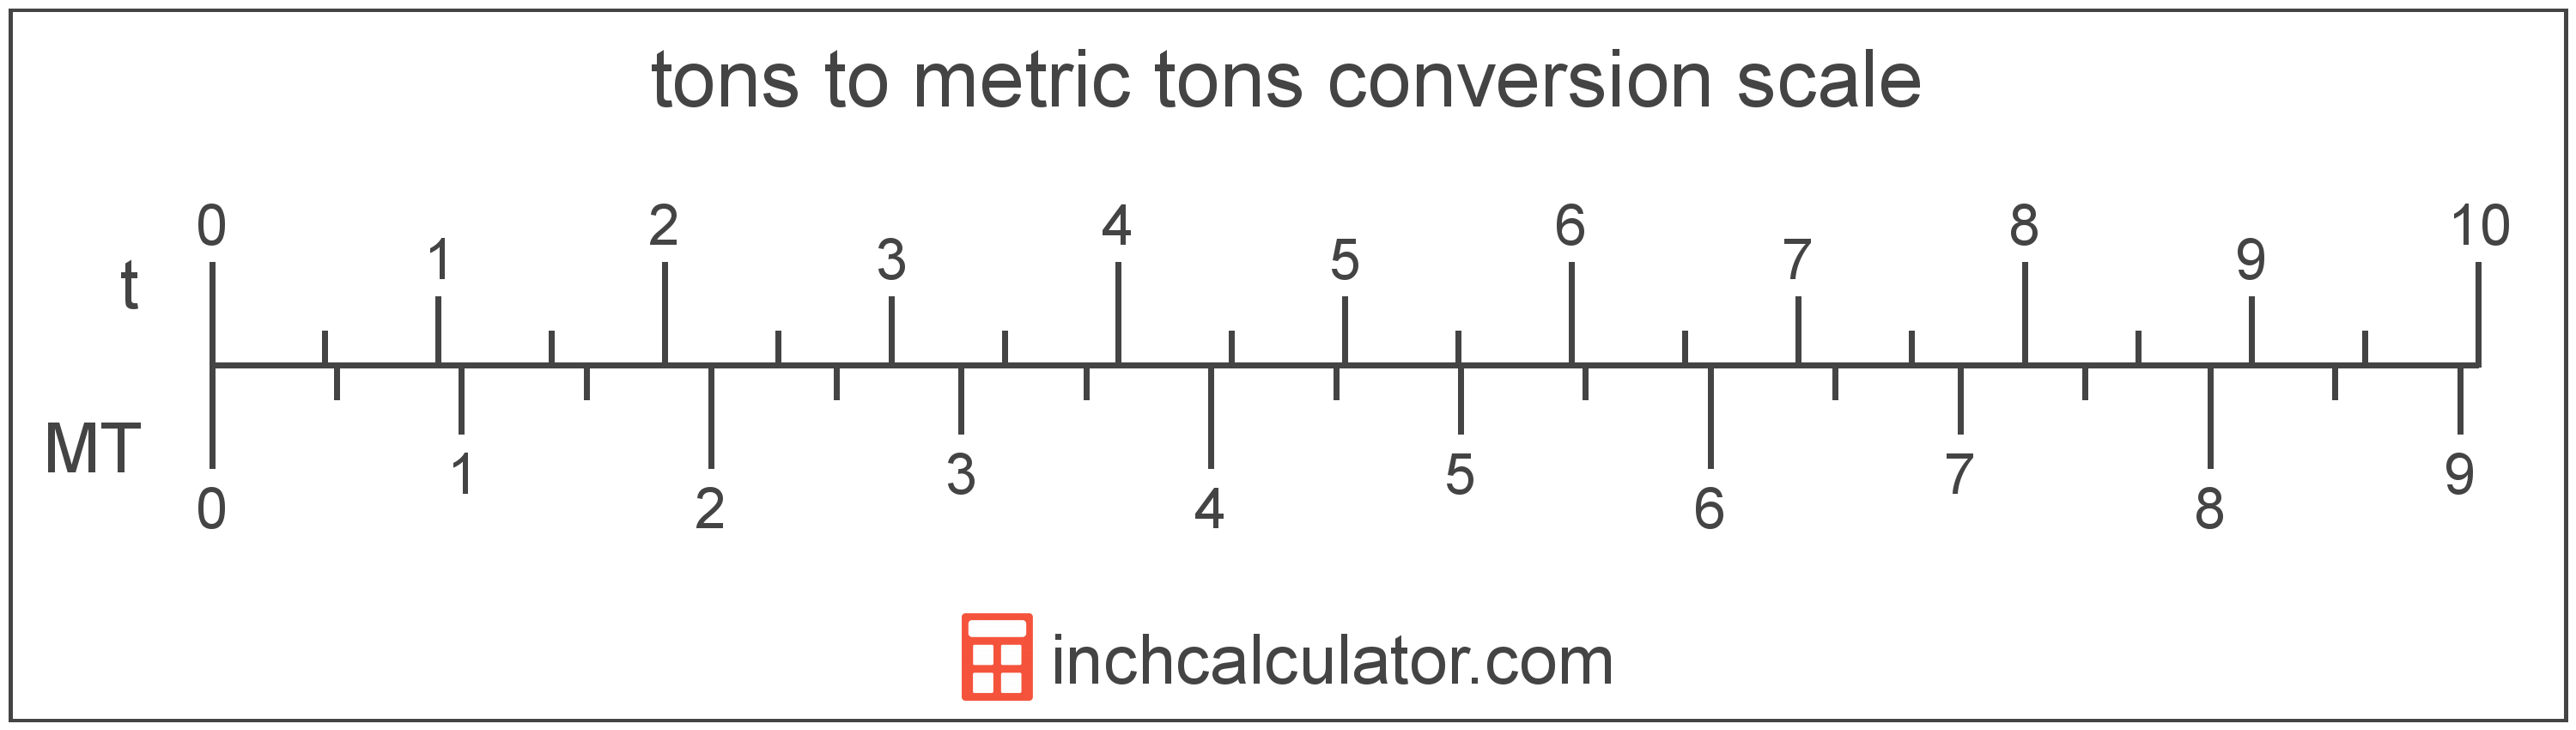 Metric Tons (Tonnes) Tons Conversion (t t)